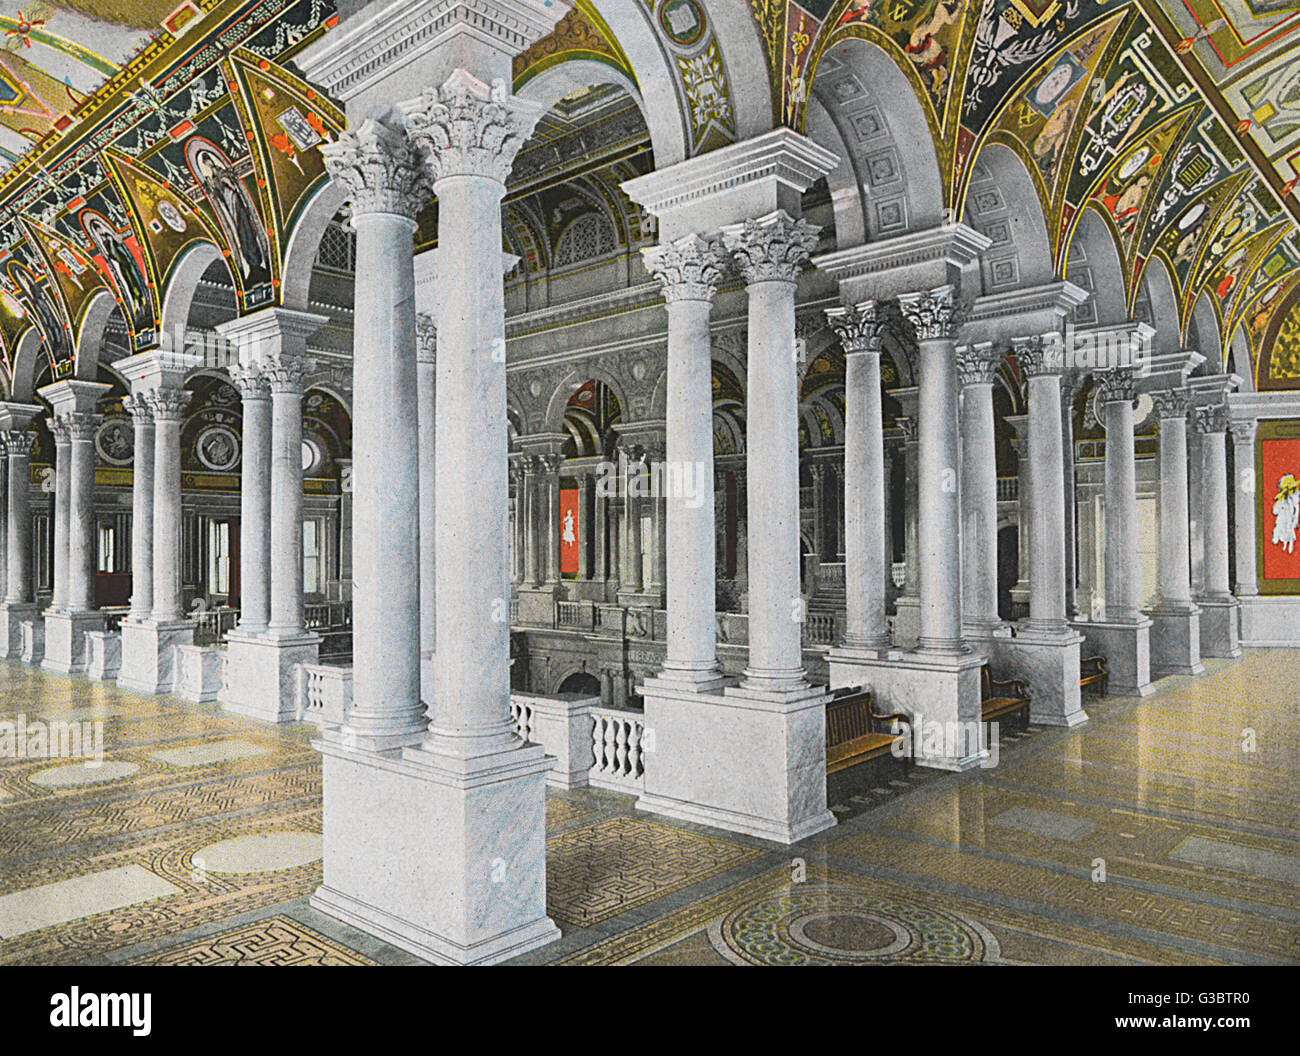 Washington DC, USA - Library of Congress - Stairhall Columns Stock Photo